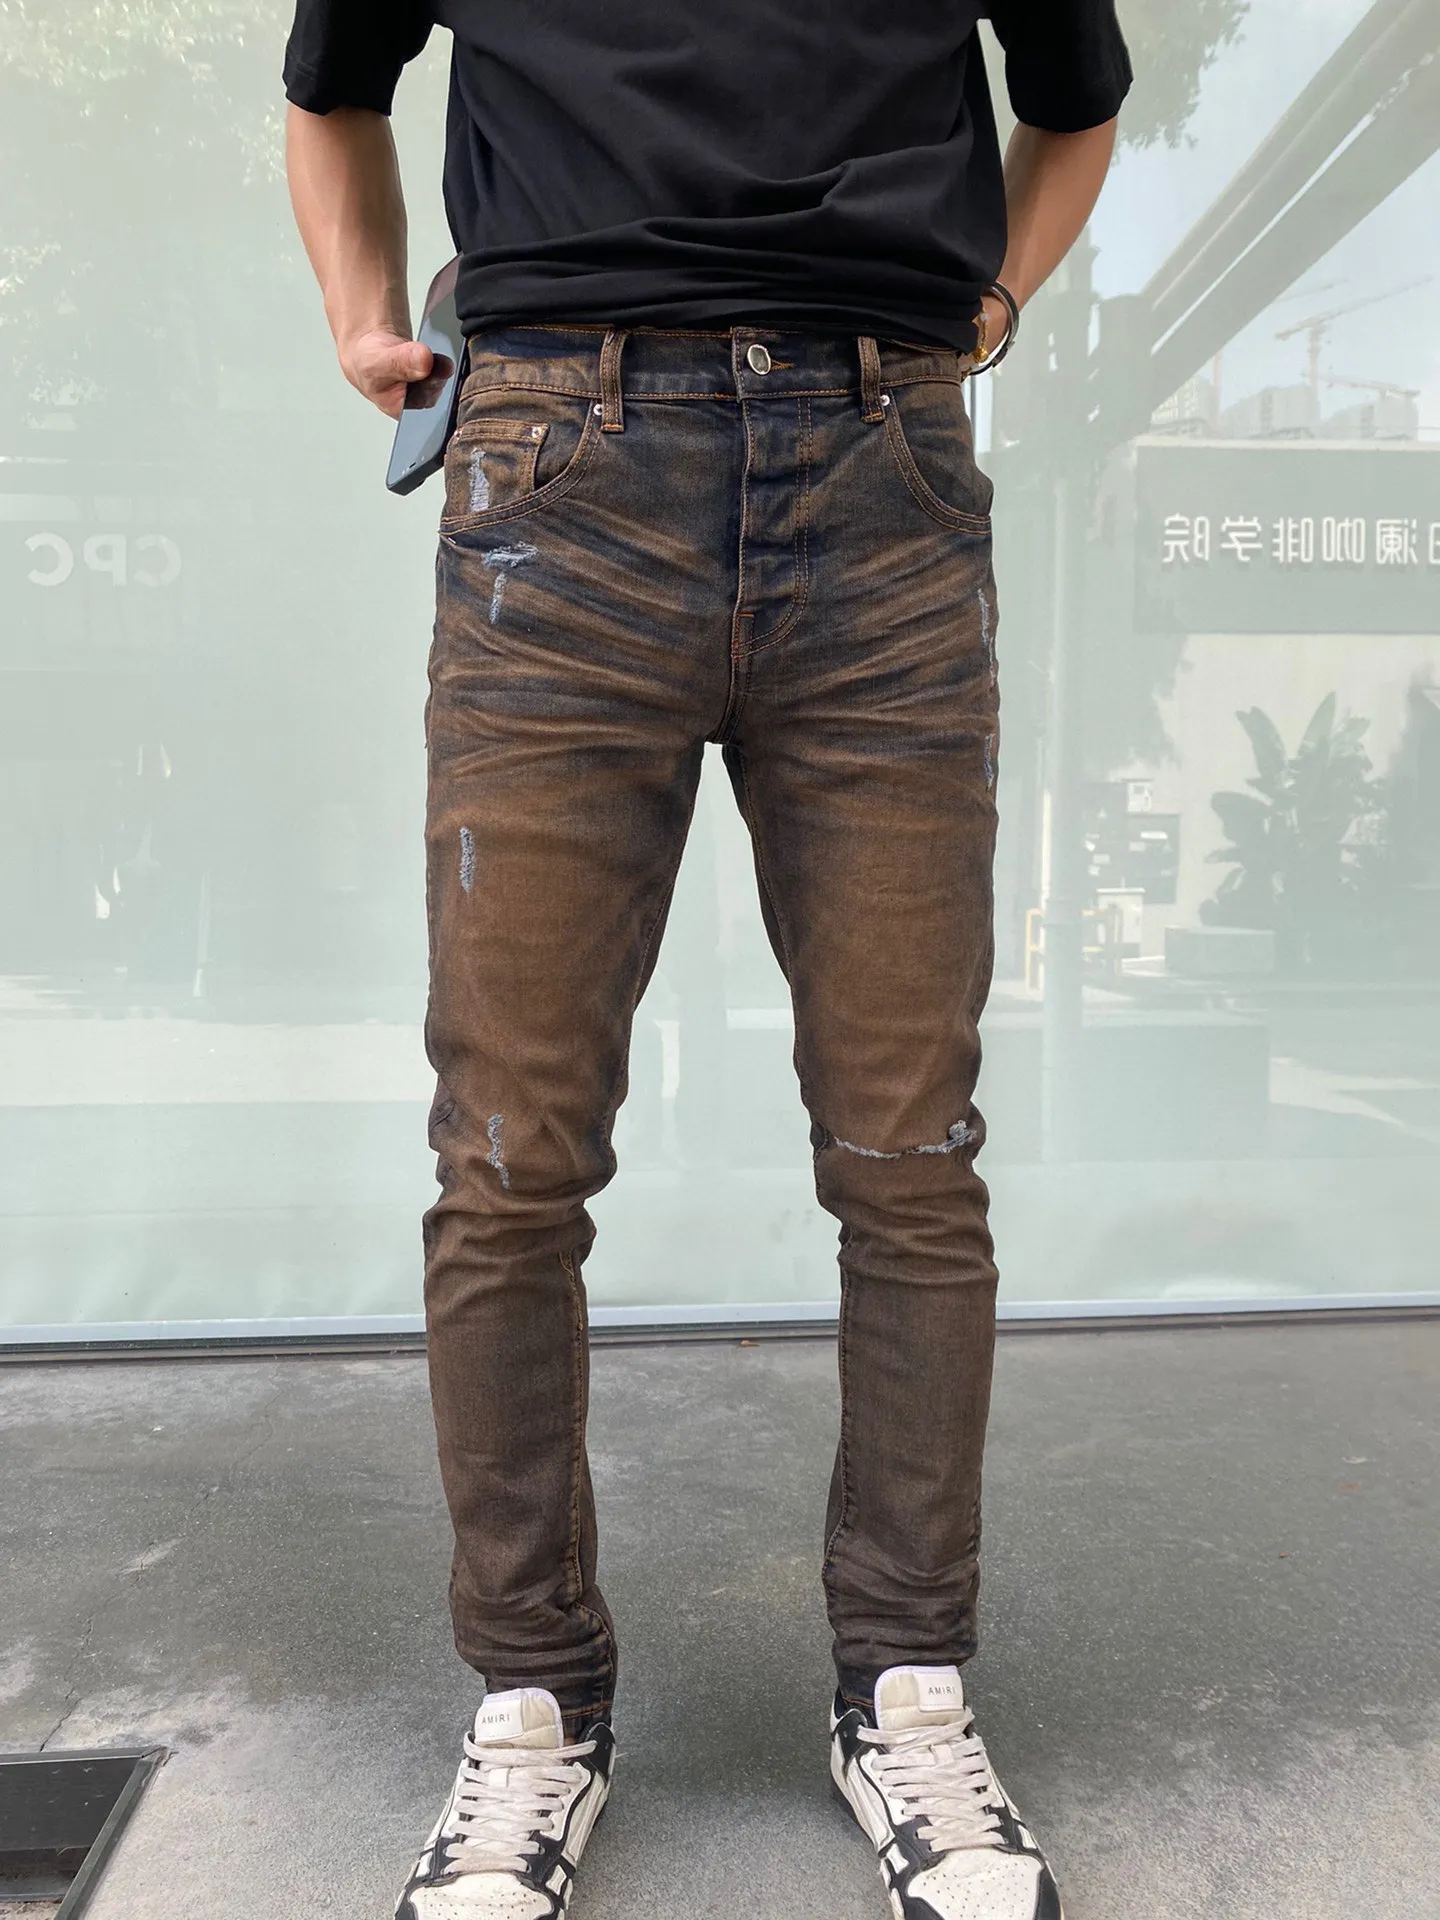 

buy brand mx1 stretch cotton denim jeans destroyed brand designer Men's Ripped Slim Fit Hip Hop Denim Distressed Skinny pants